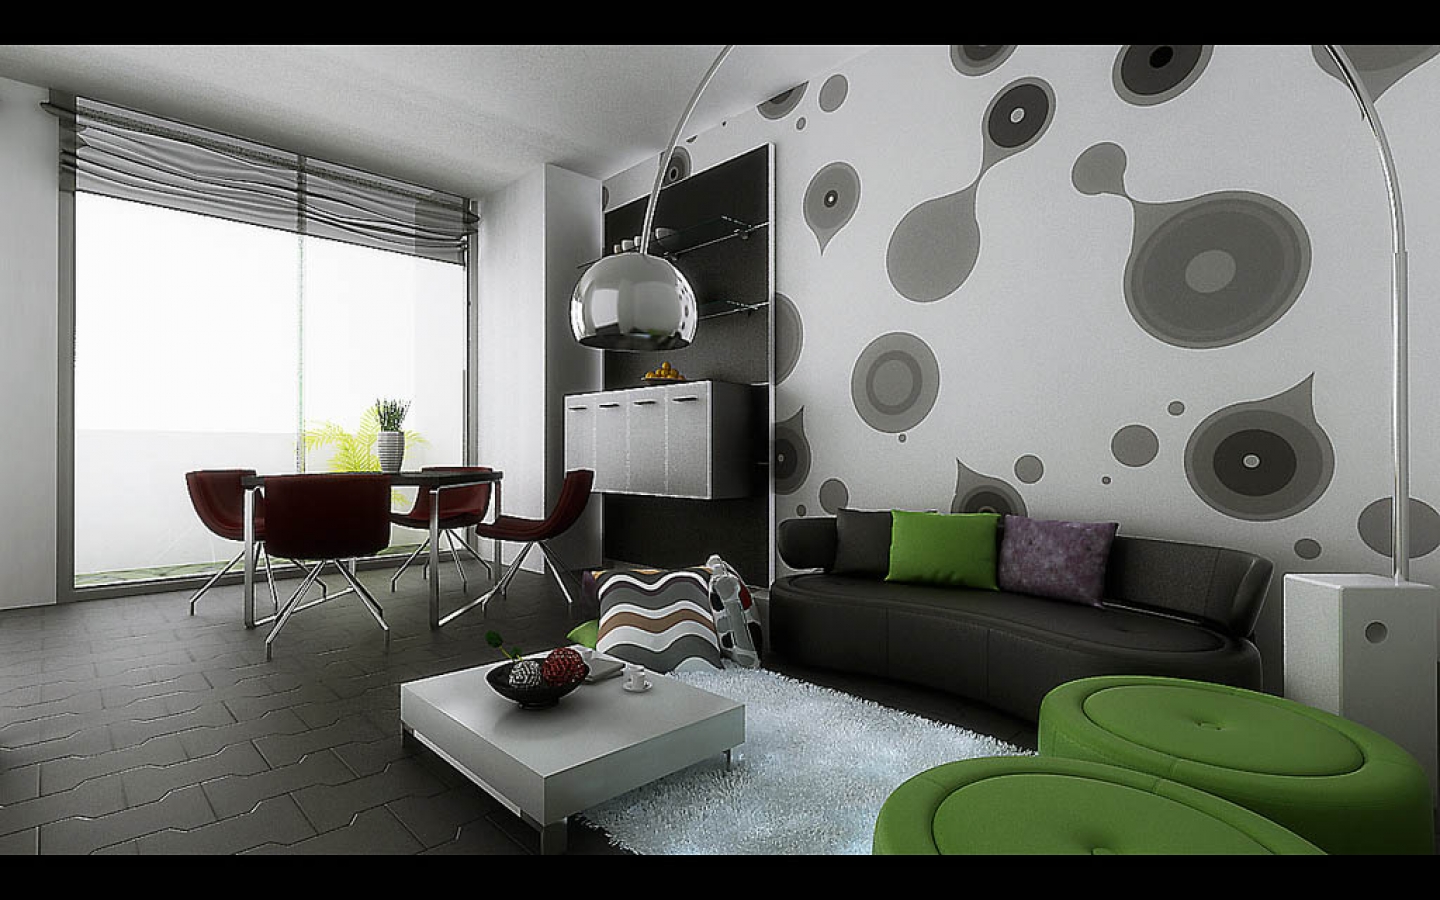  interiordesignforhouses com living room living room wall living 1440x900